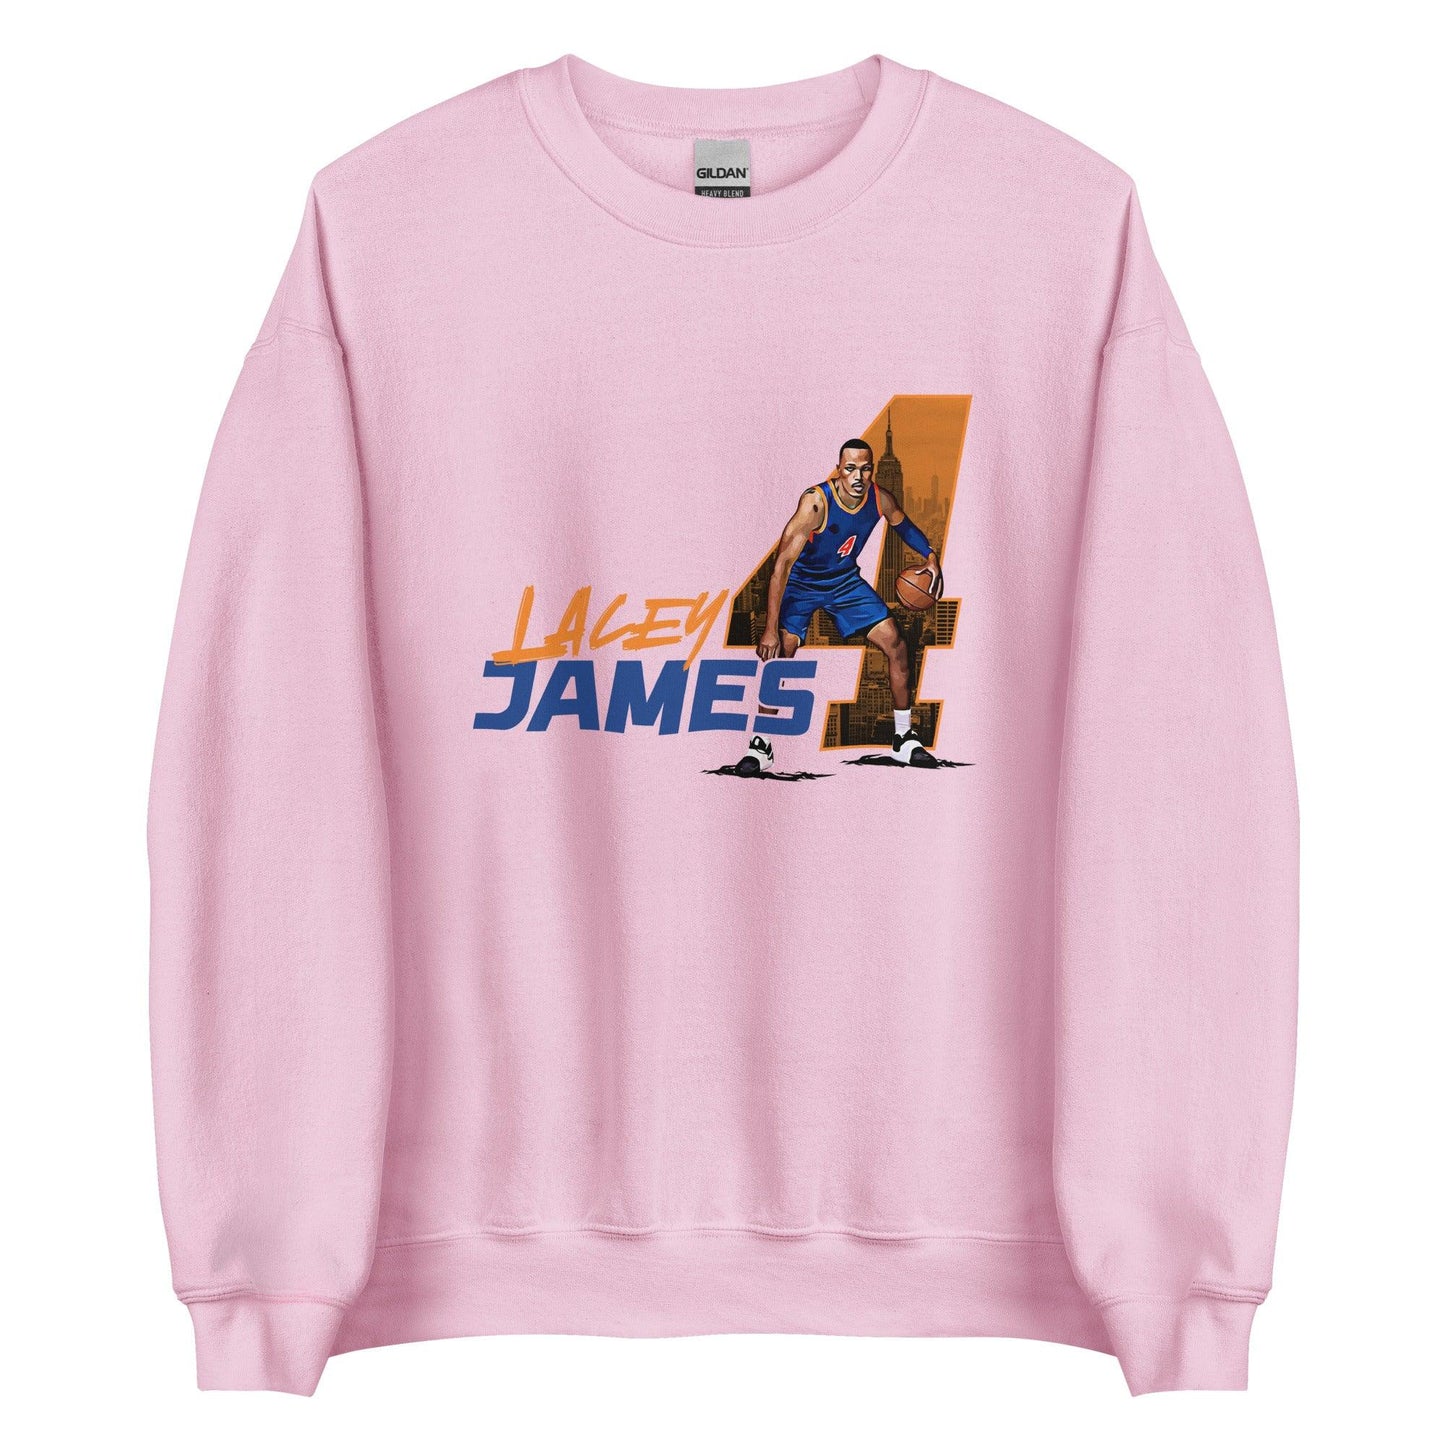 Lacey James "Gameday" Sweatshirt - Fan Arch